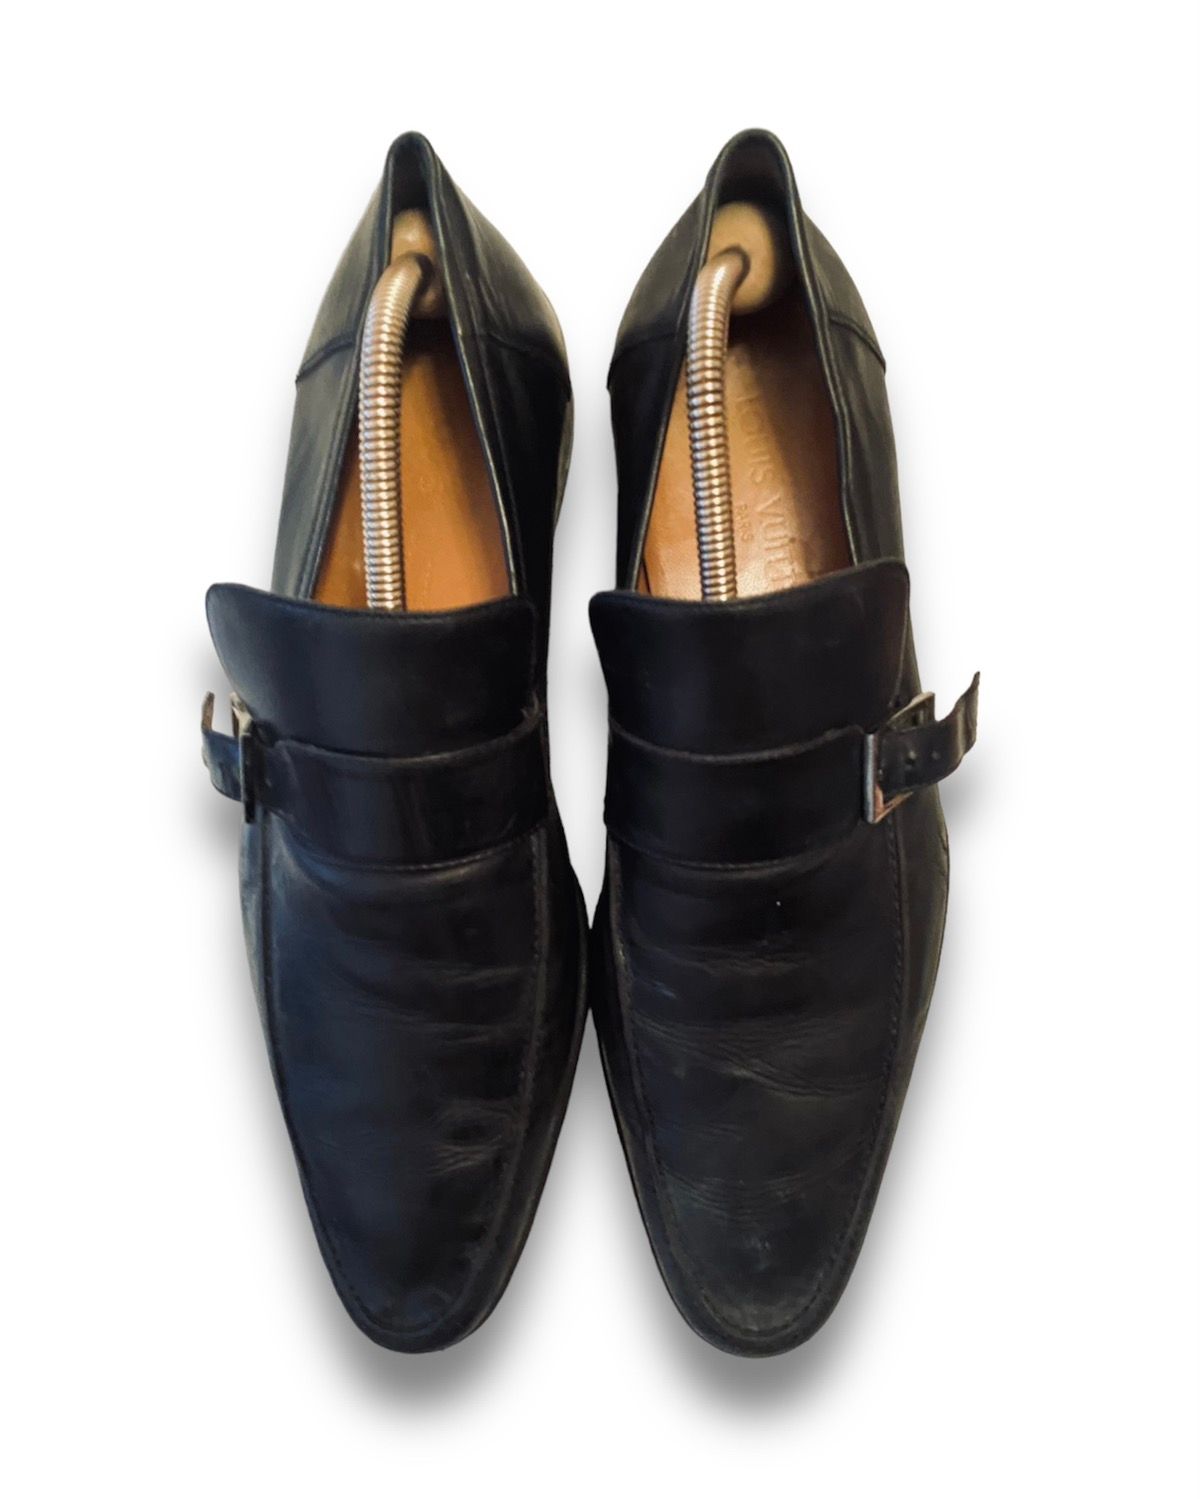 Louis Vuittons Mens Leather Derby Oxford Shoes Size US 9 - 7